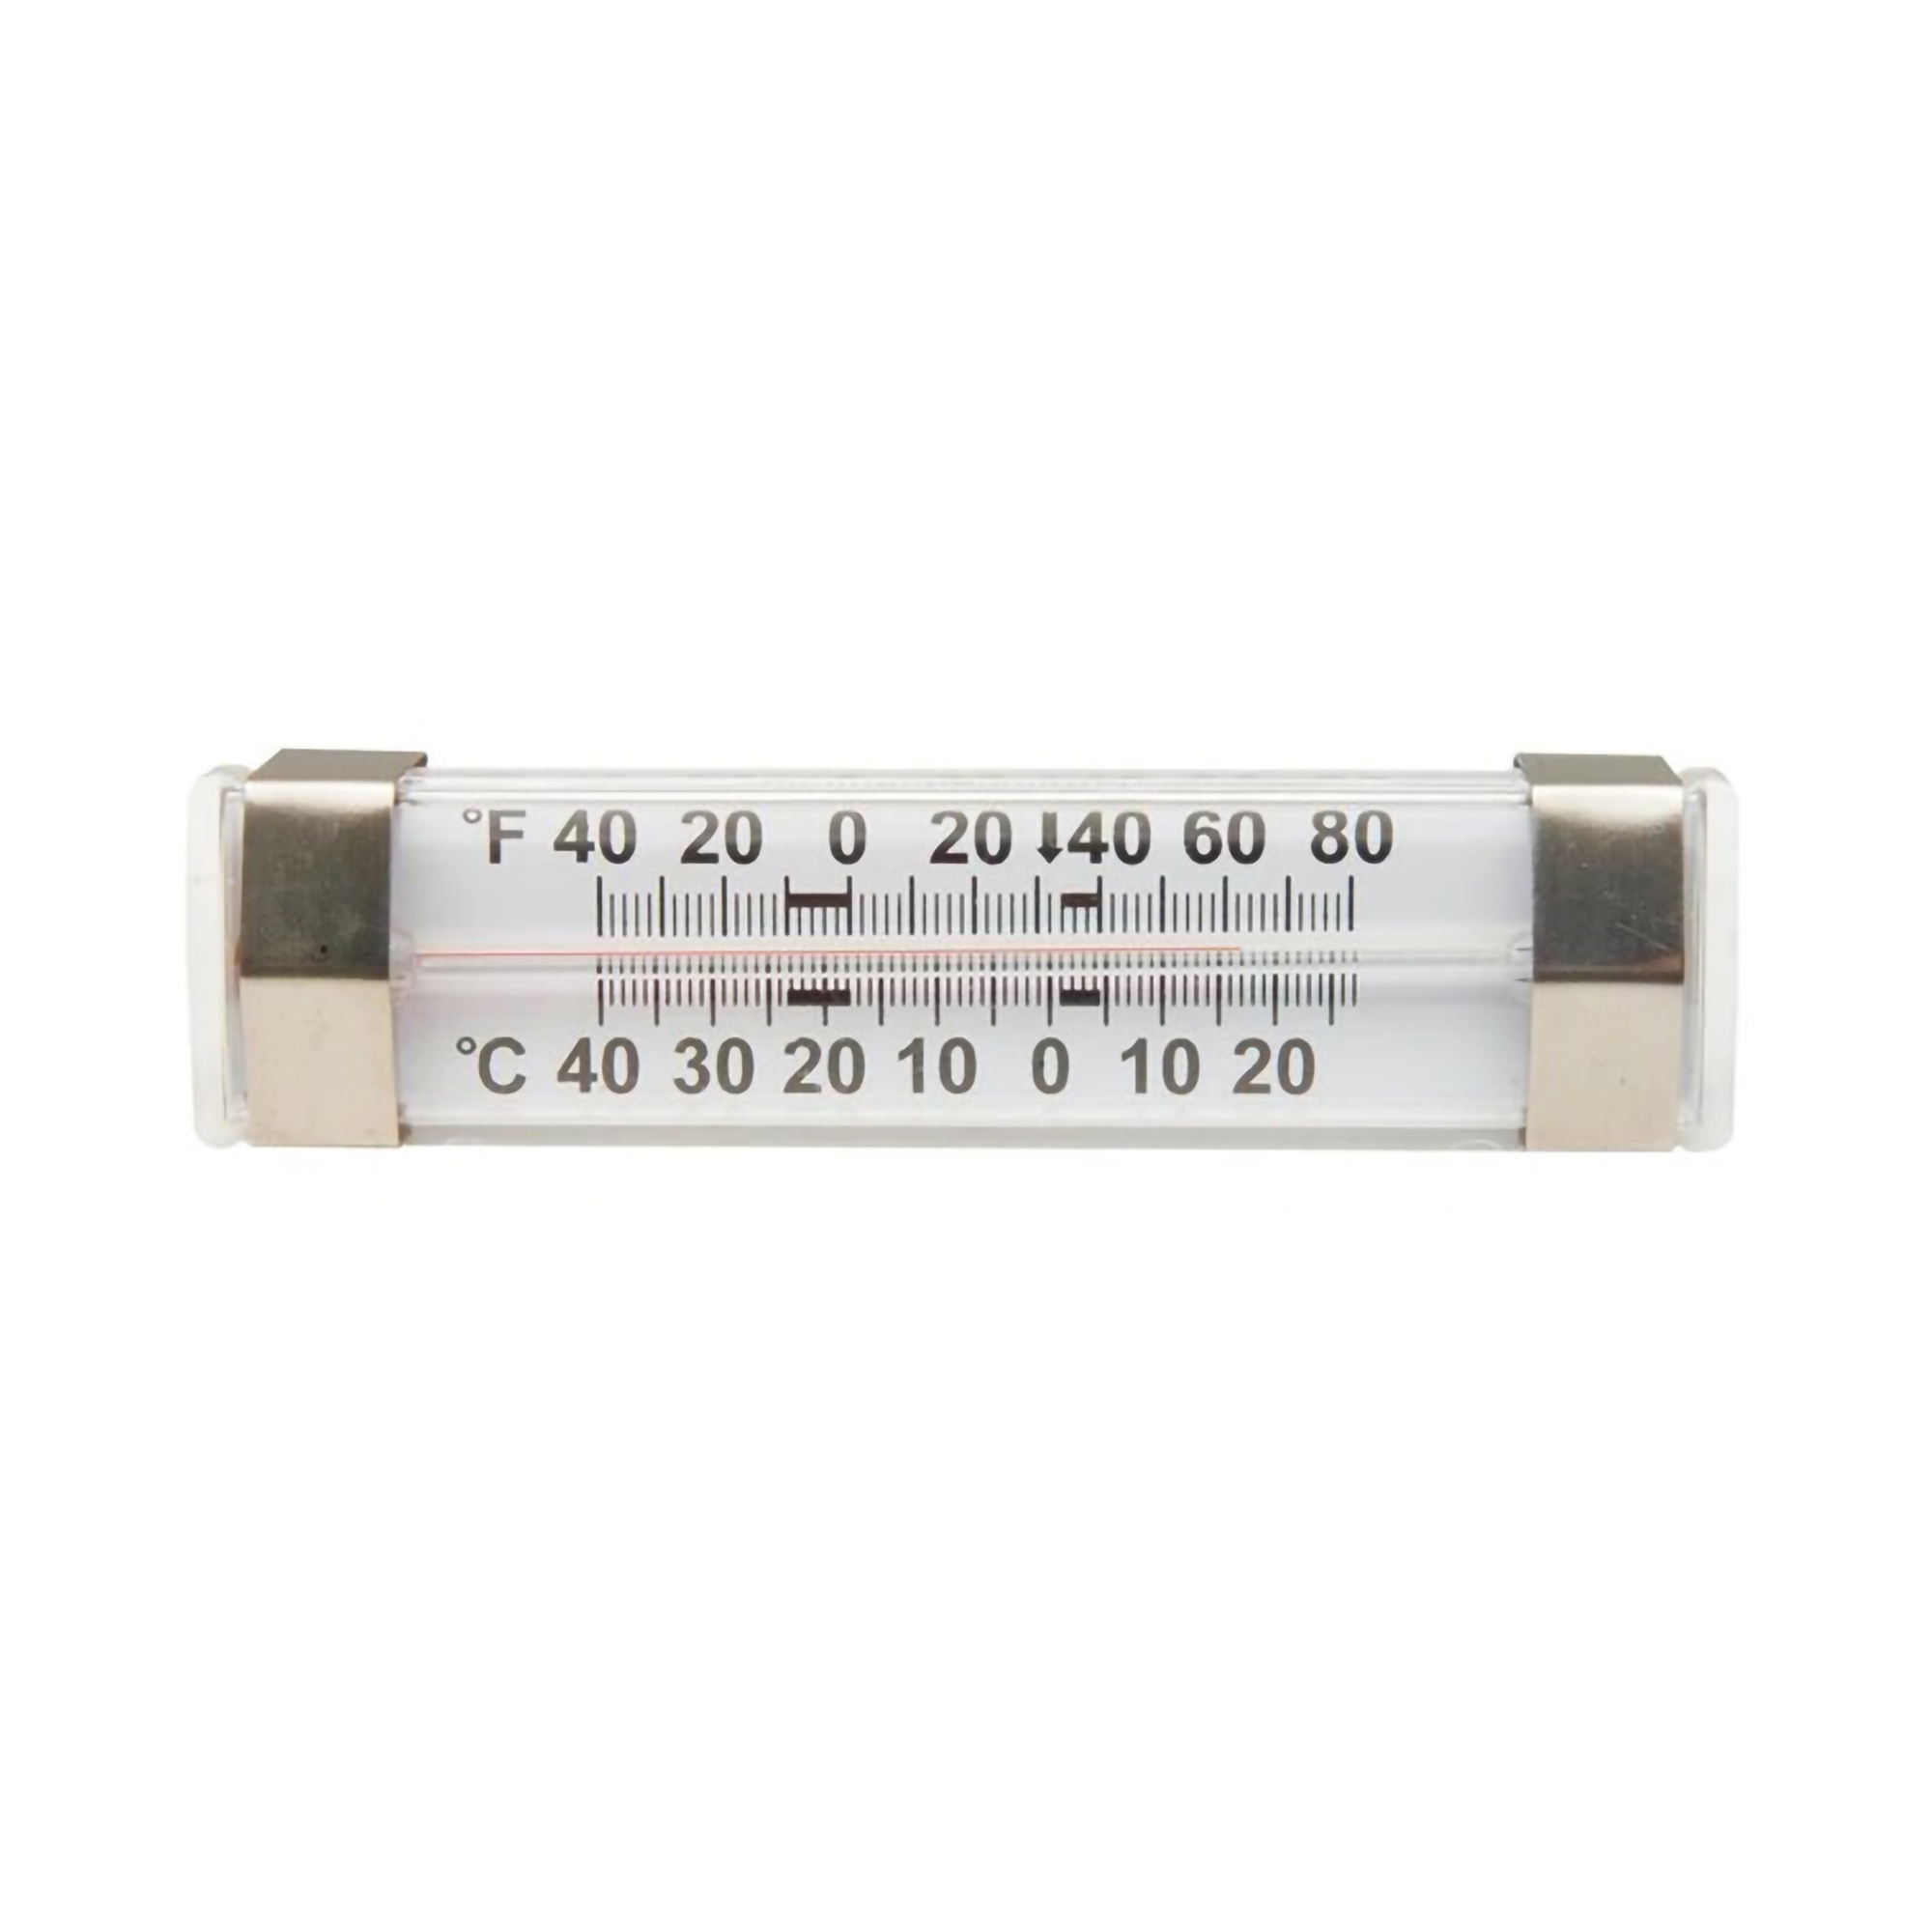 FG80AK Refrigerator/Freezer Thermometer from Comark